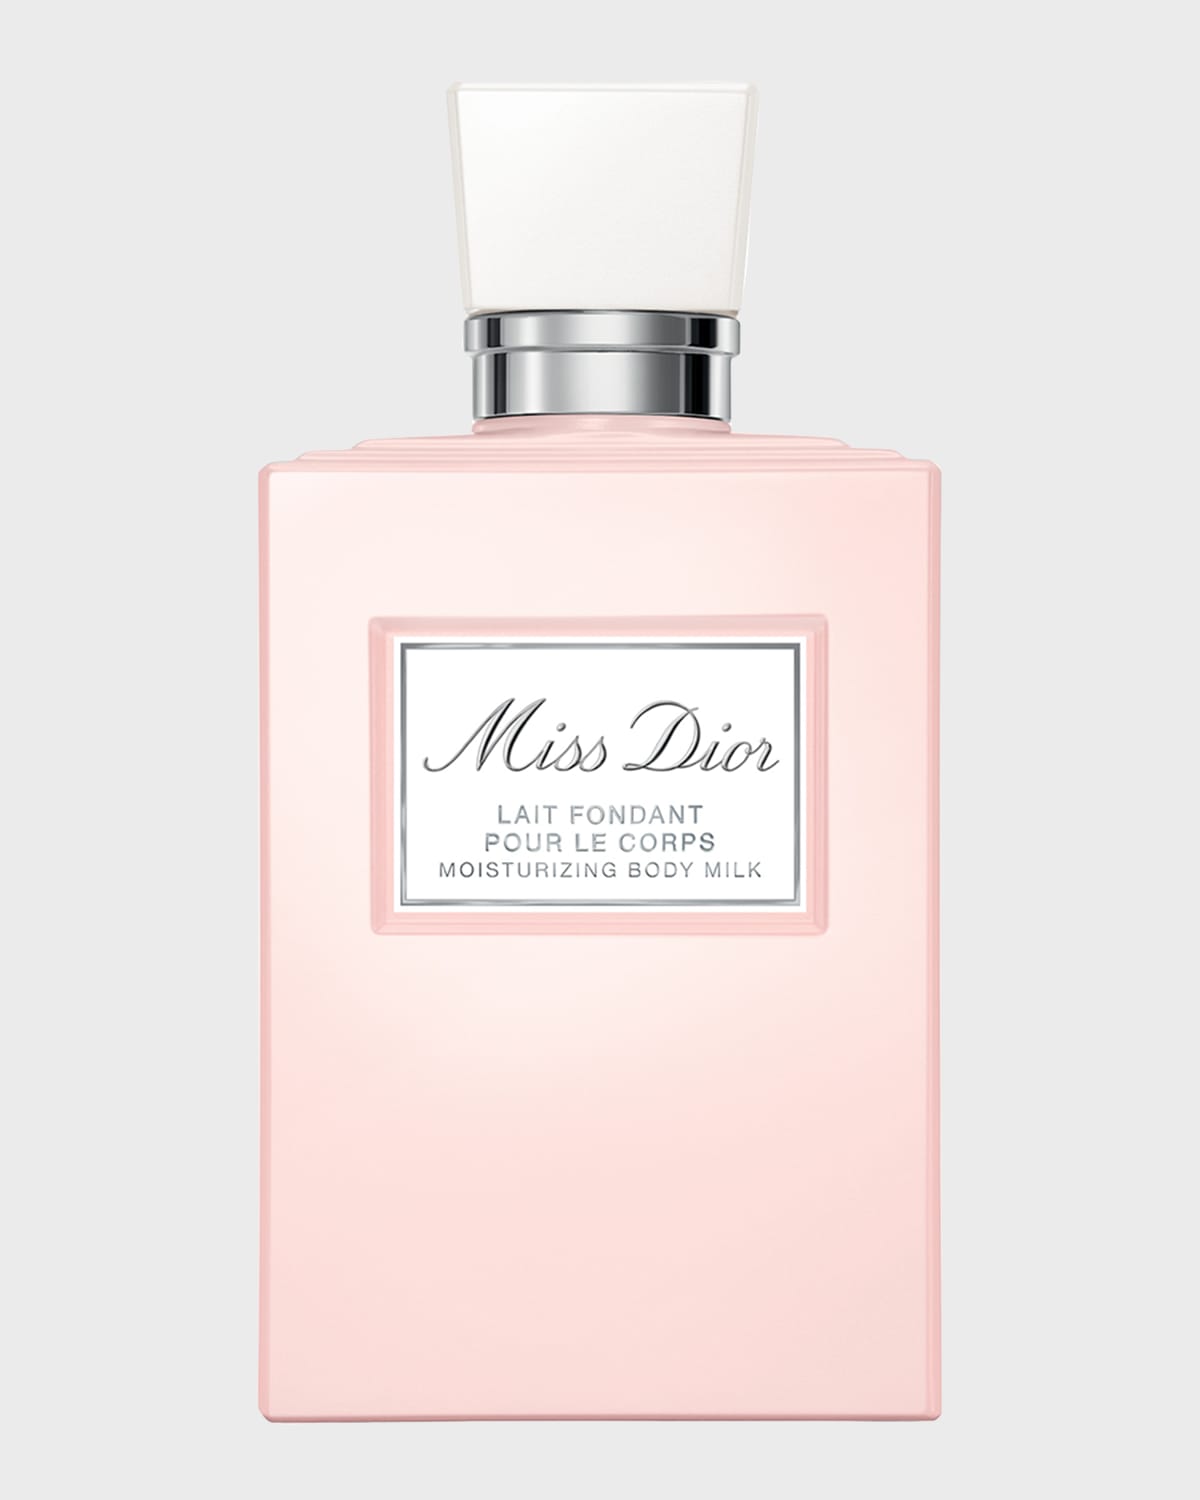 Miss Dior Moisturizing Body Milk, 6.8 oz.